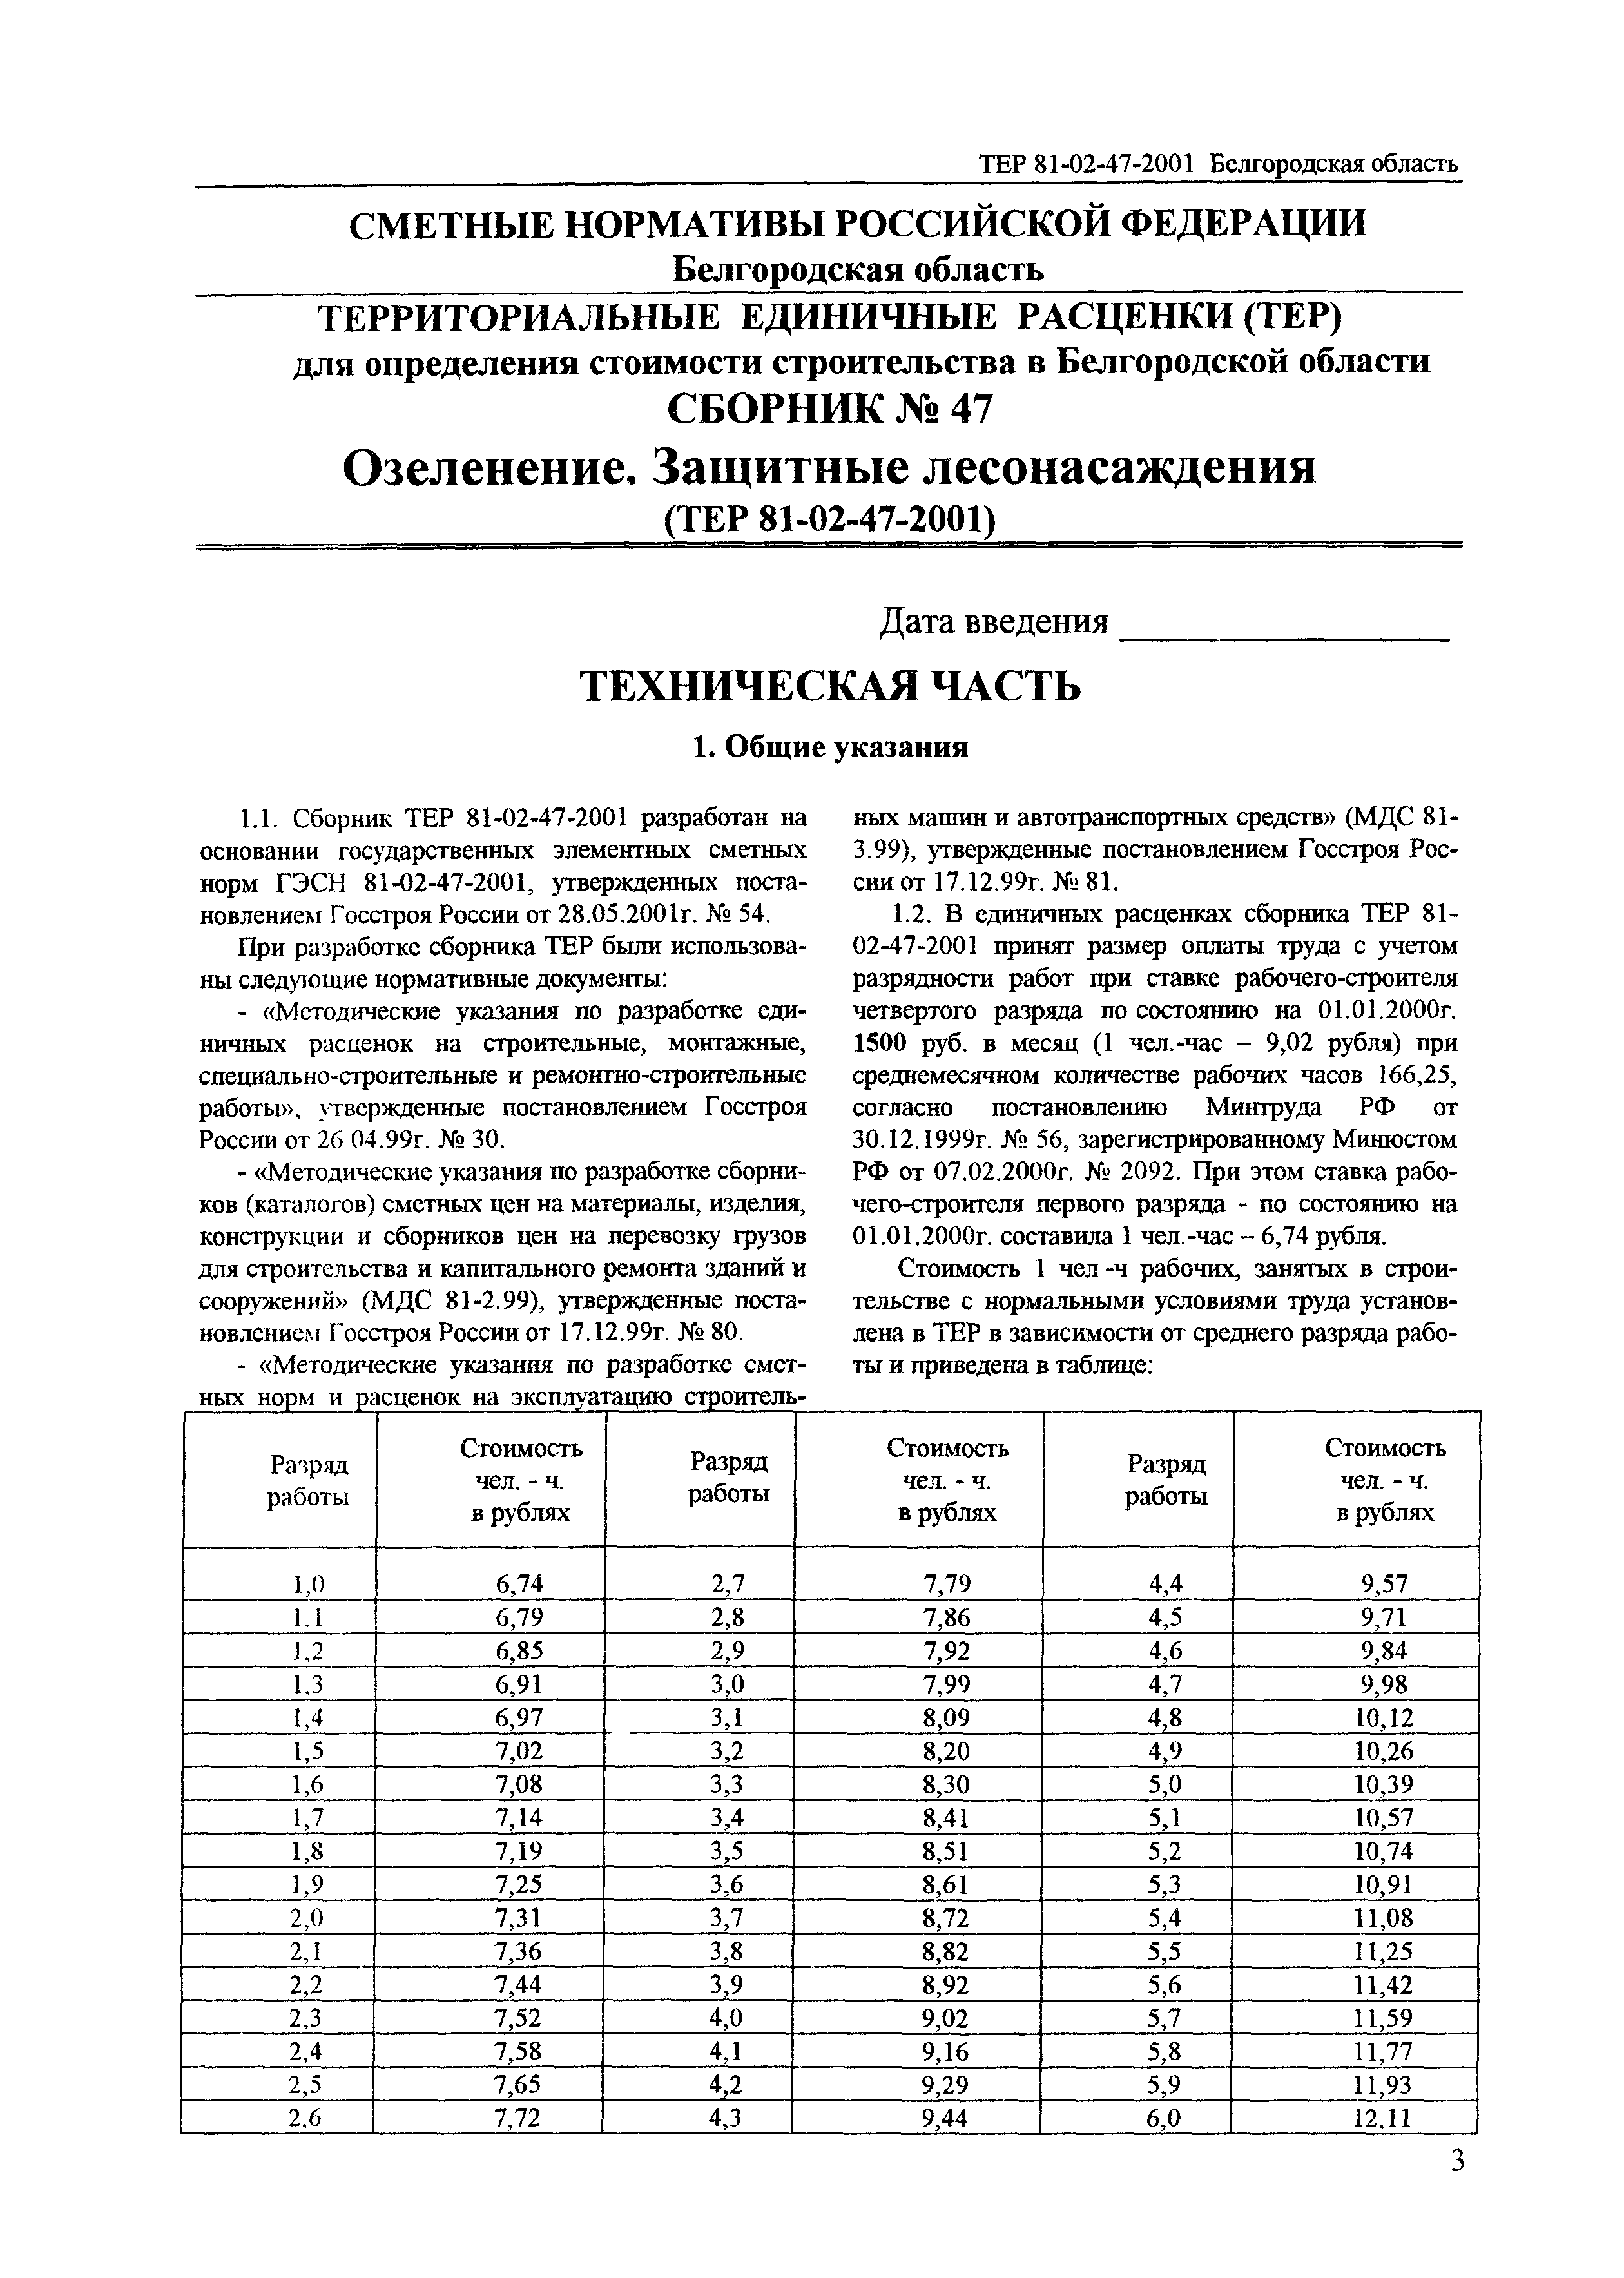 ТЕР 2001-47 Белгородской области